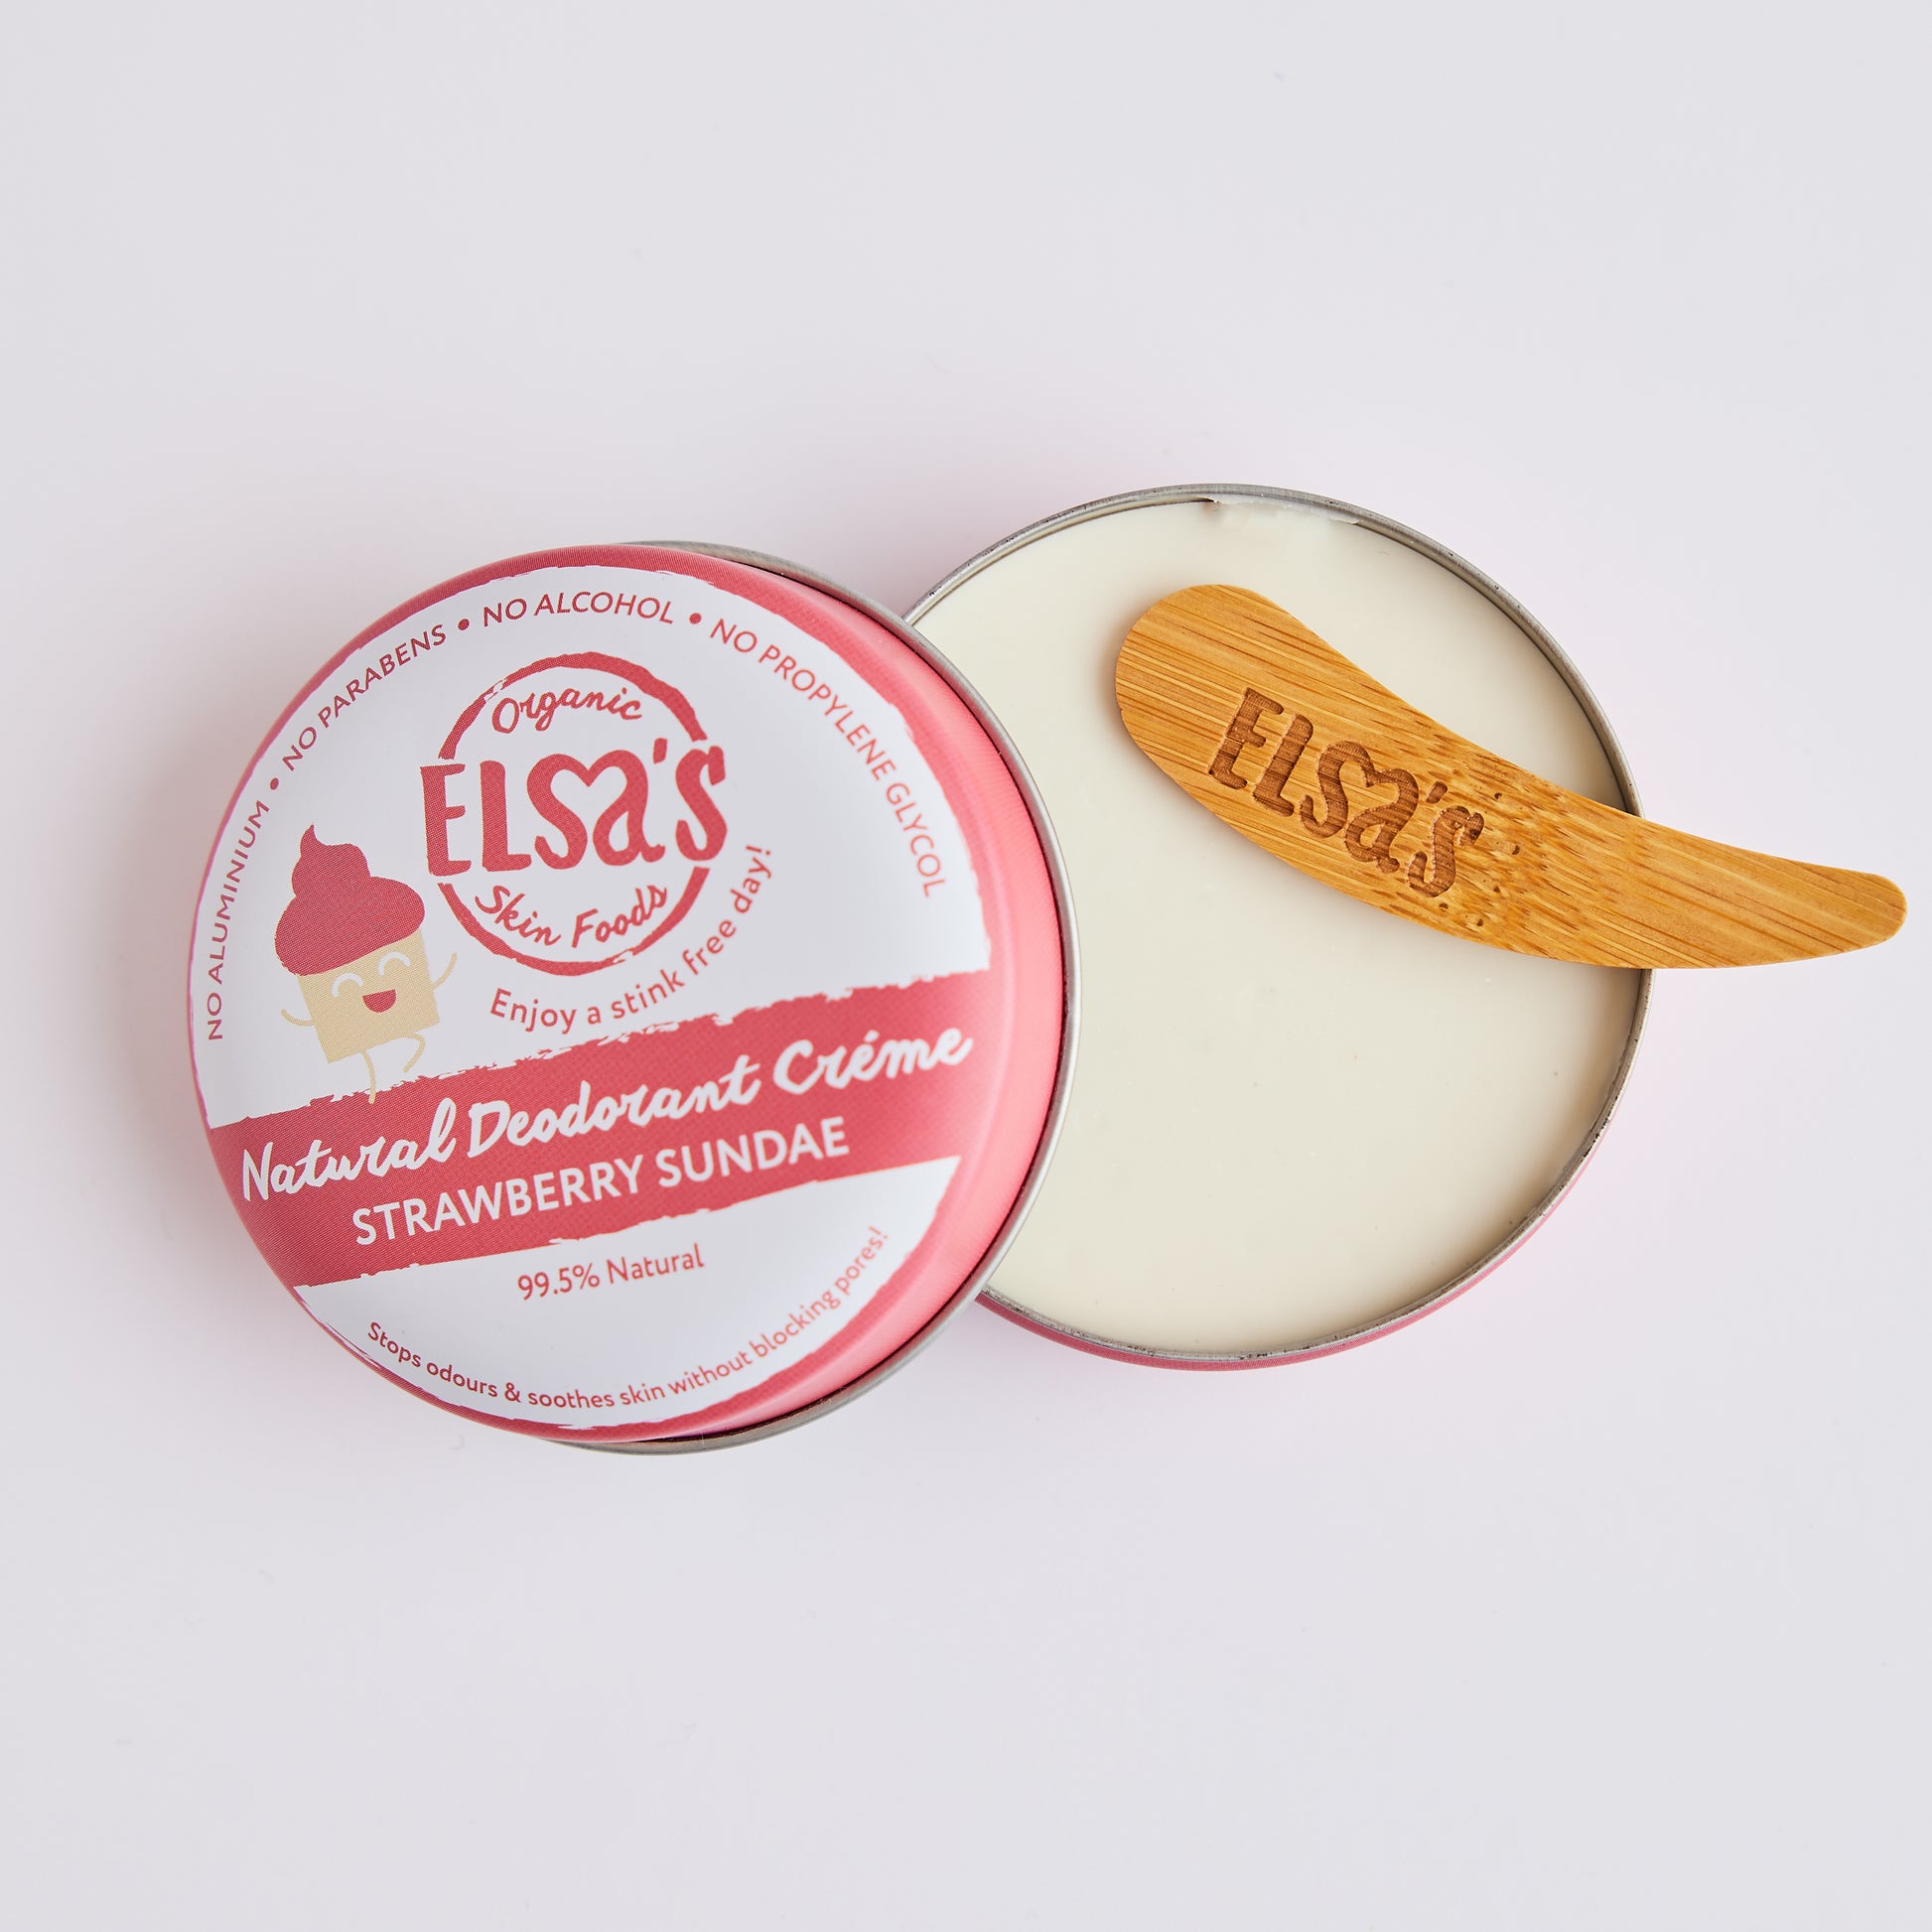 Elsas_Organic_Skinfoods Deodorant Strawberry Sundae Open